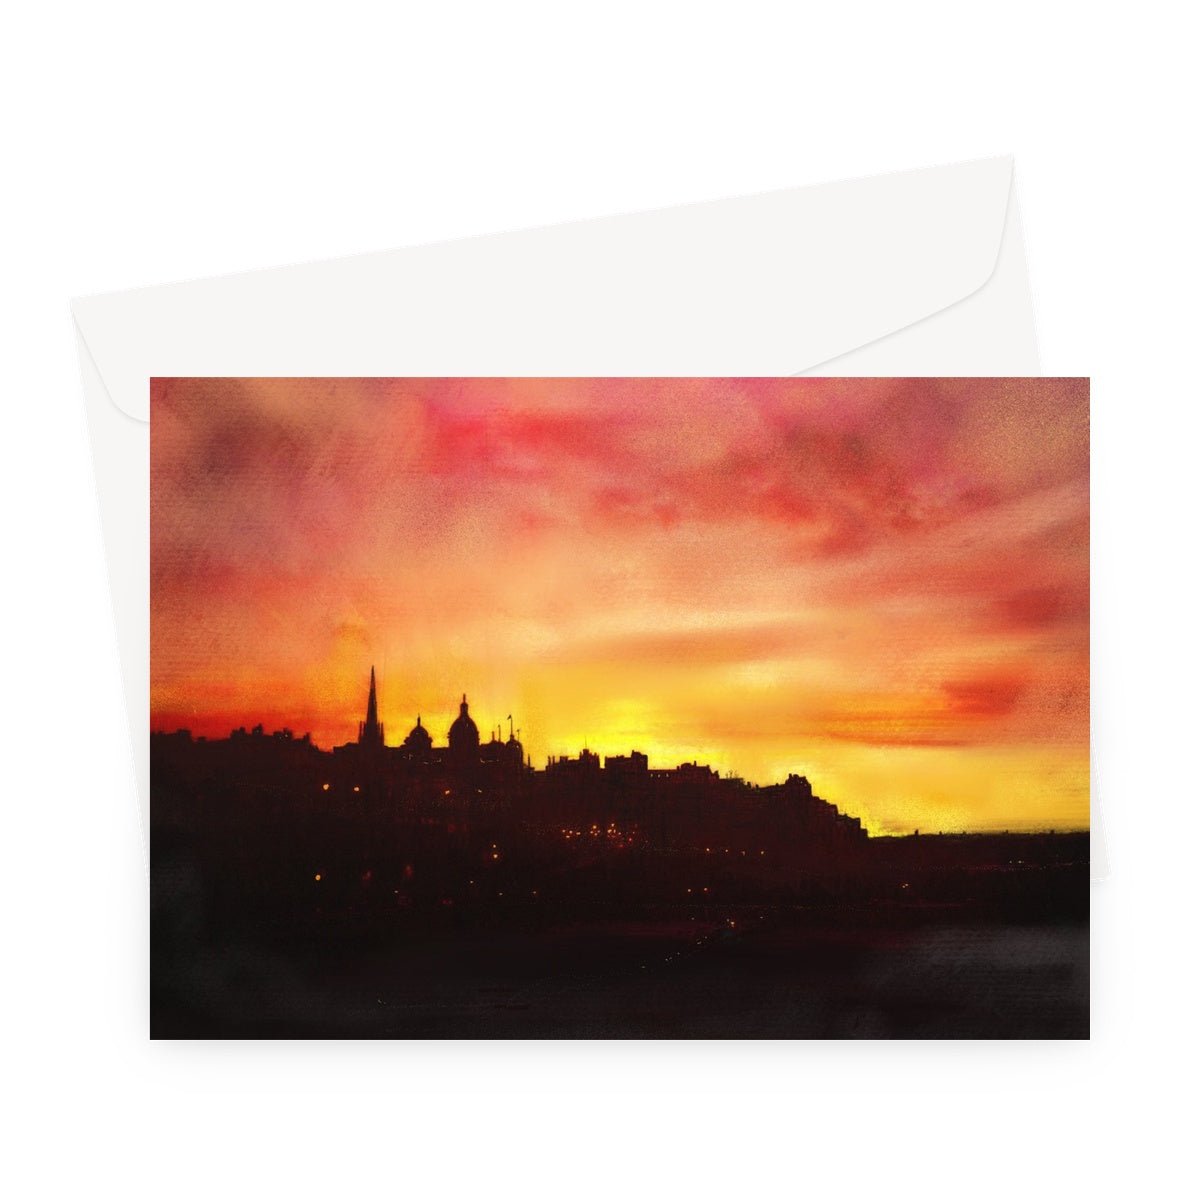 Edinburgh Sunset Art Gifts Greeting Card-Greetings Cards-Edinburgh & Glasgow Art Gallery-A5 Landscape-1 Card-Paintings, Prints, Homeware, Art Gifts From Scotland By Scottish Artist Kevin Hunter